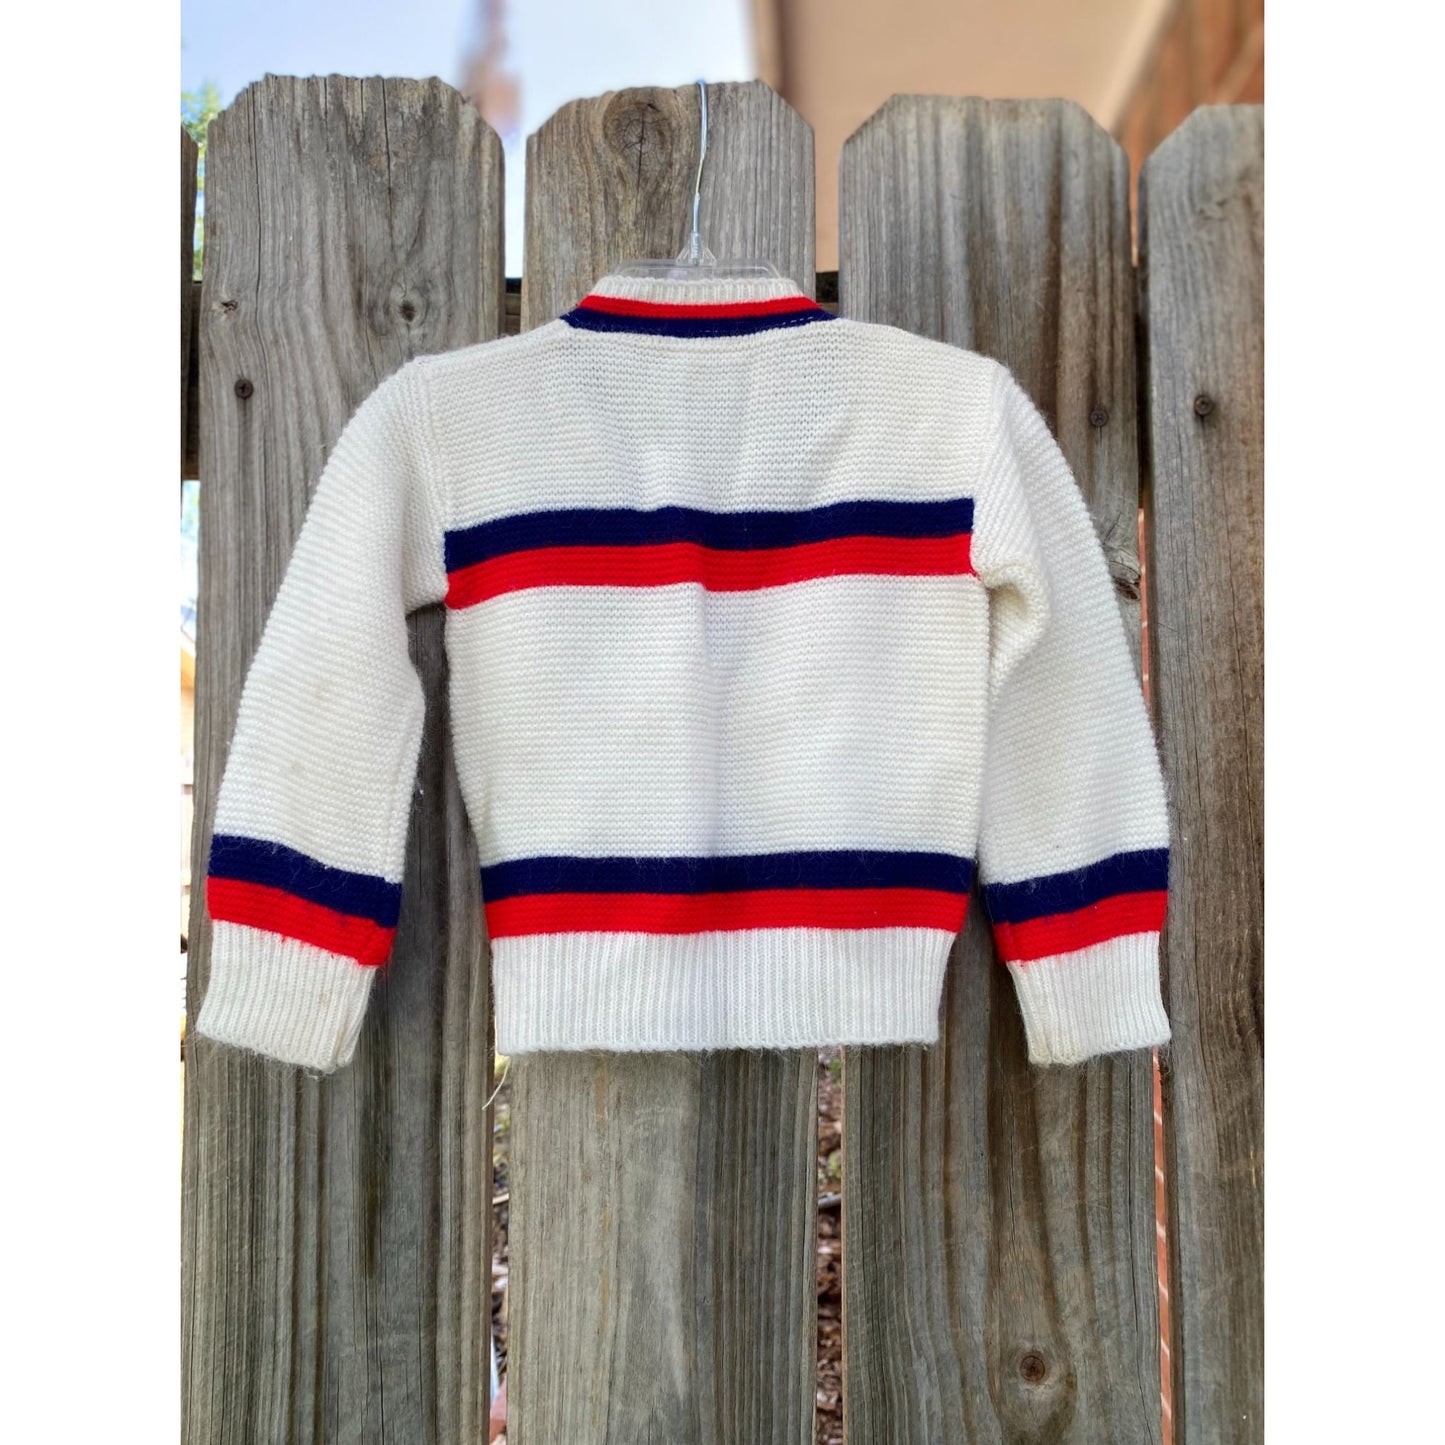 70's Boys Orlon Acrylic Sweater